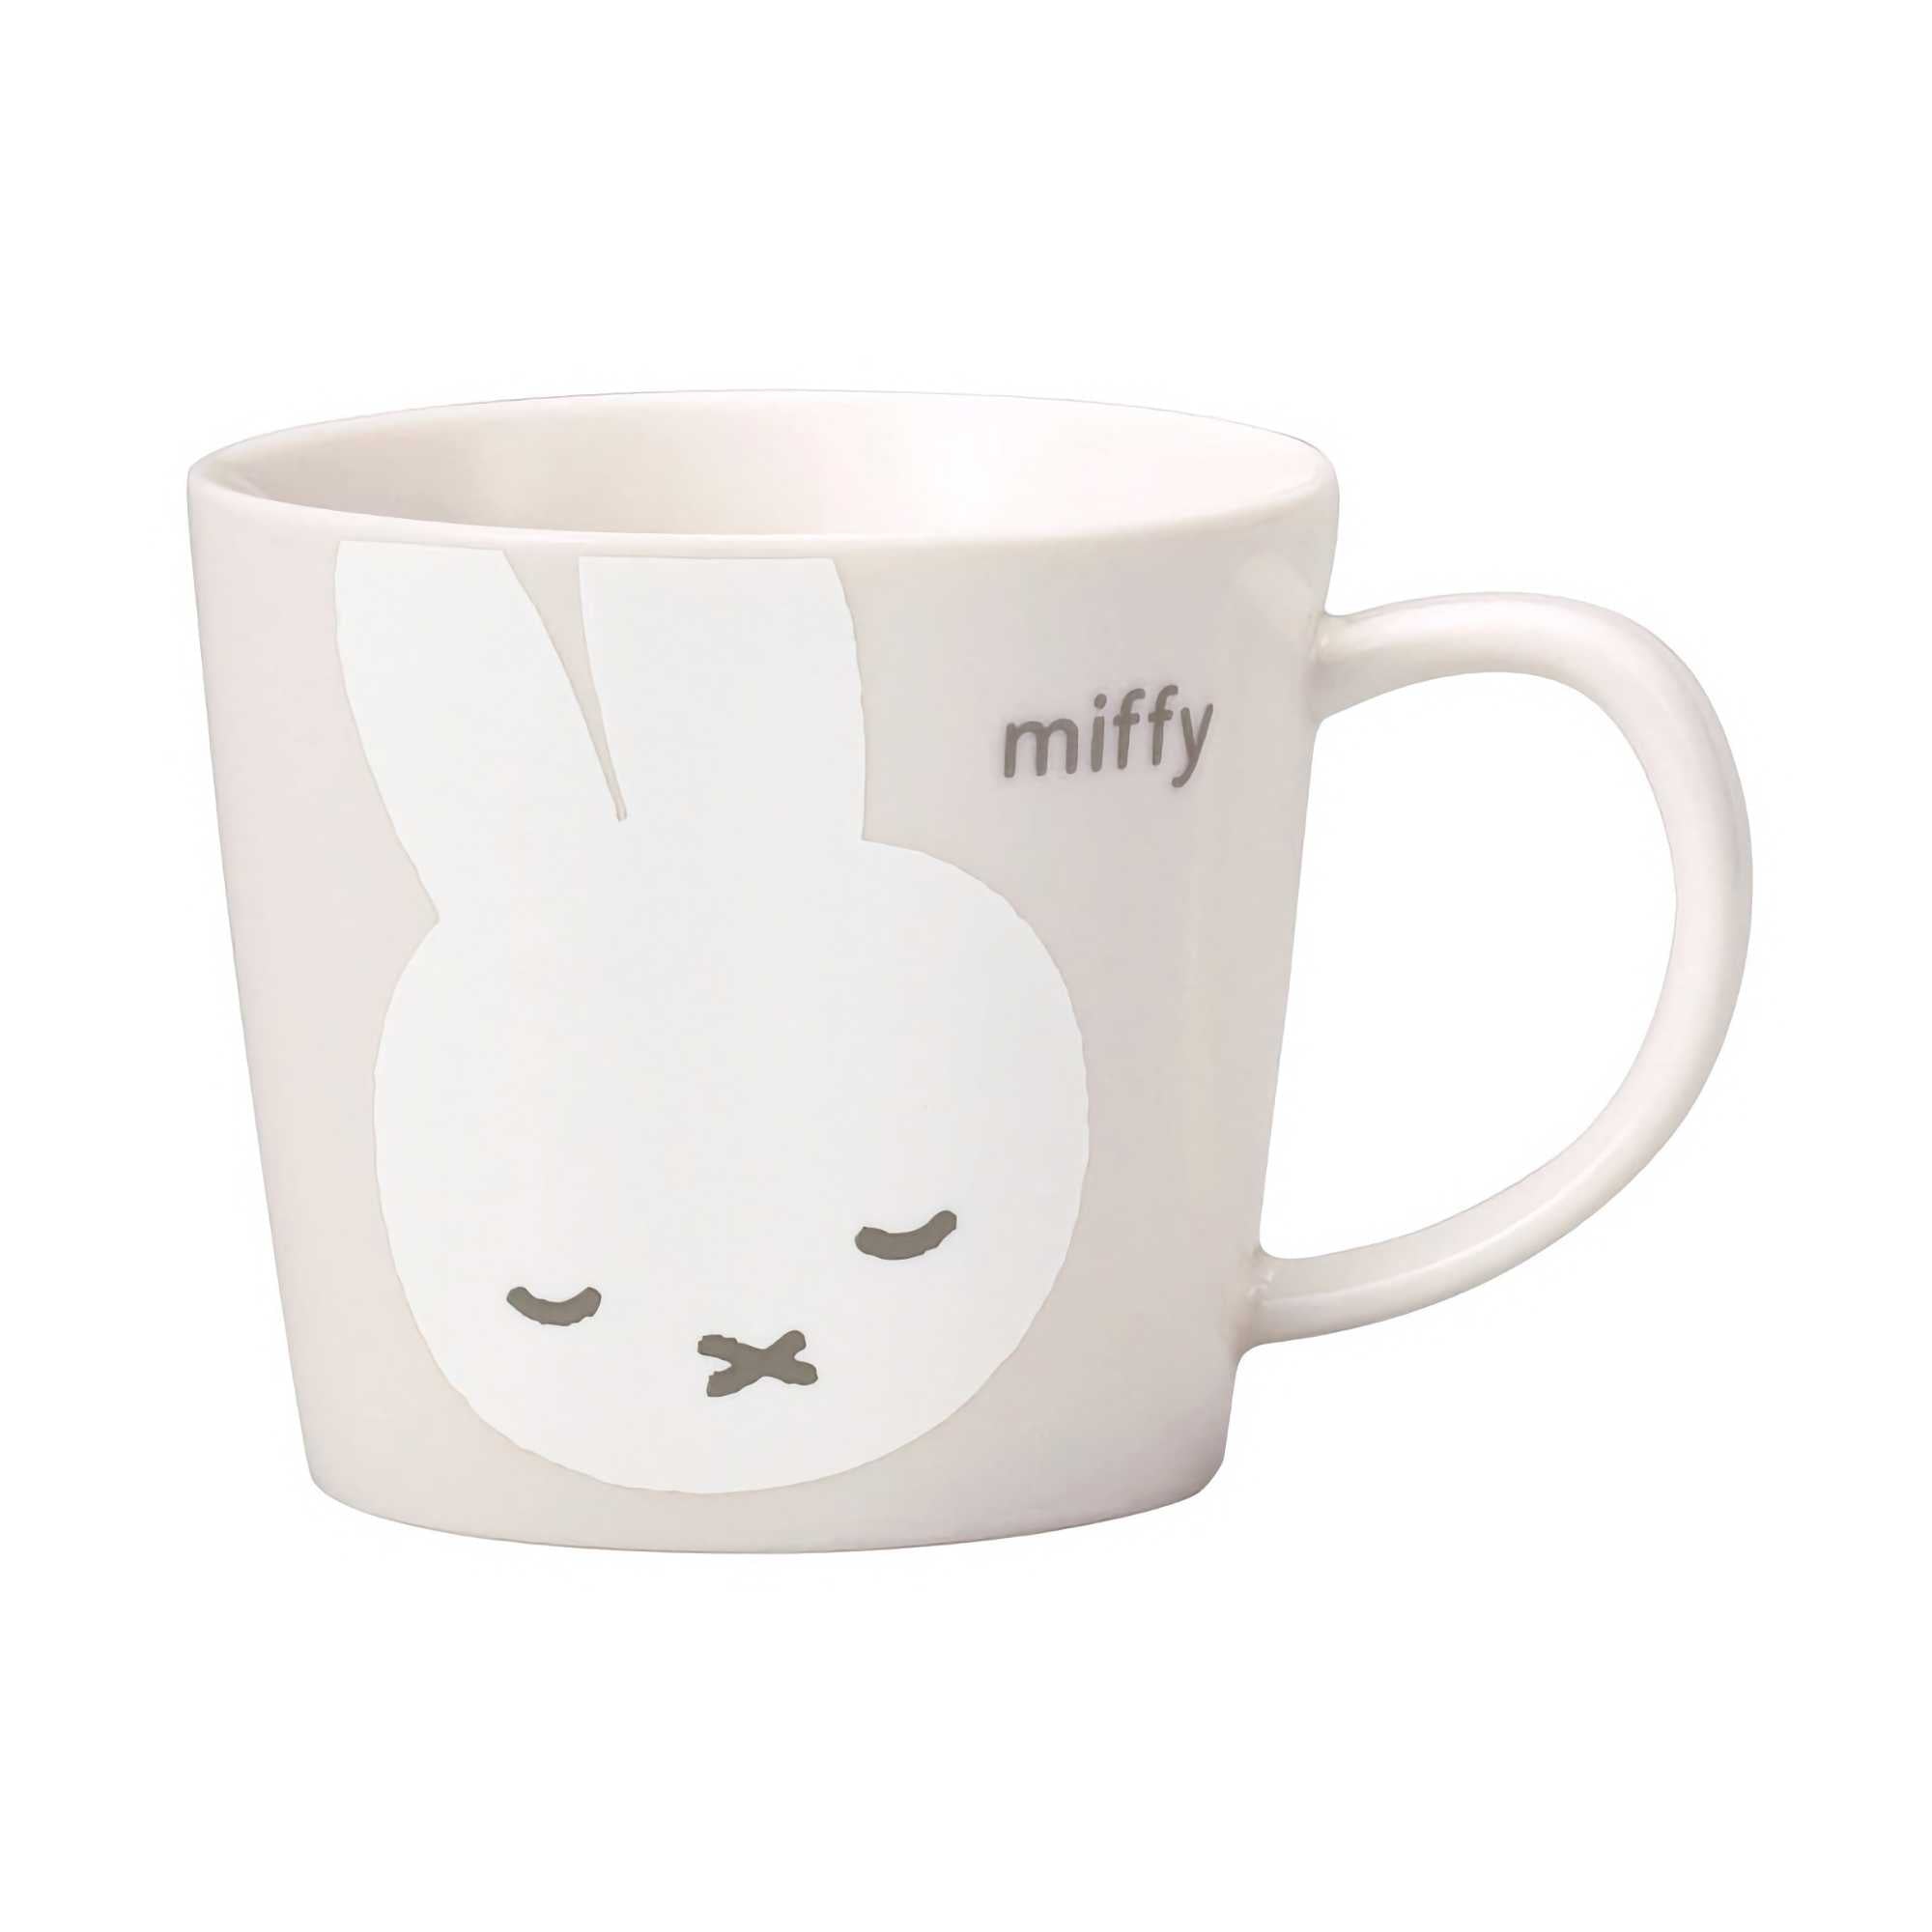 Miffy White Face Mug, sleep